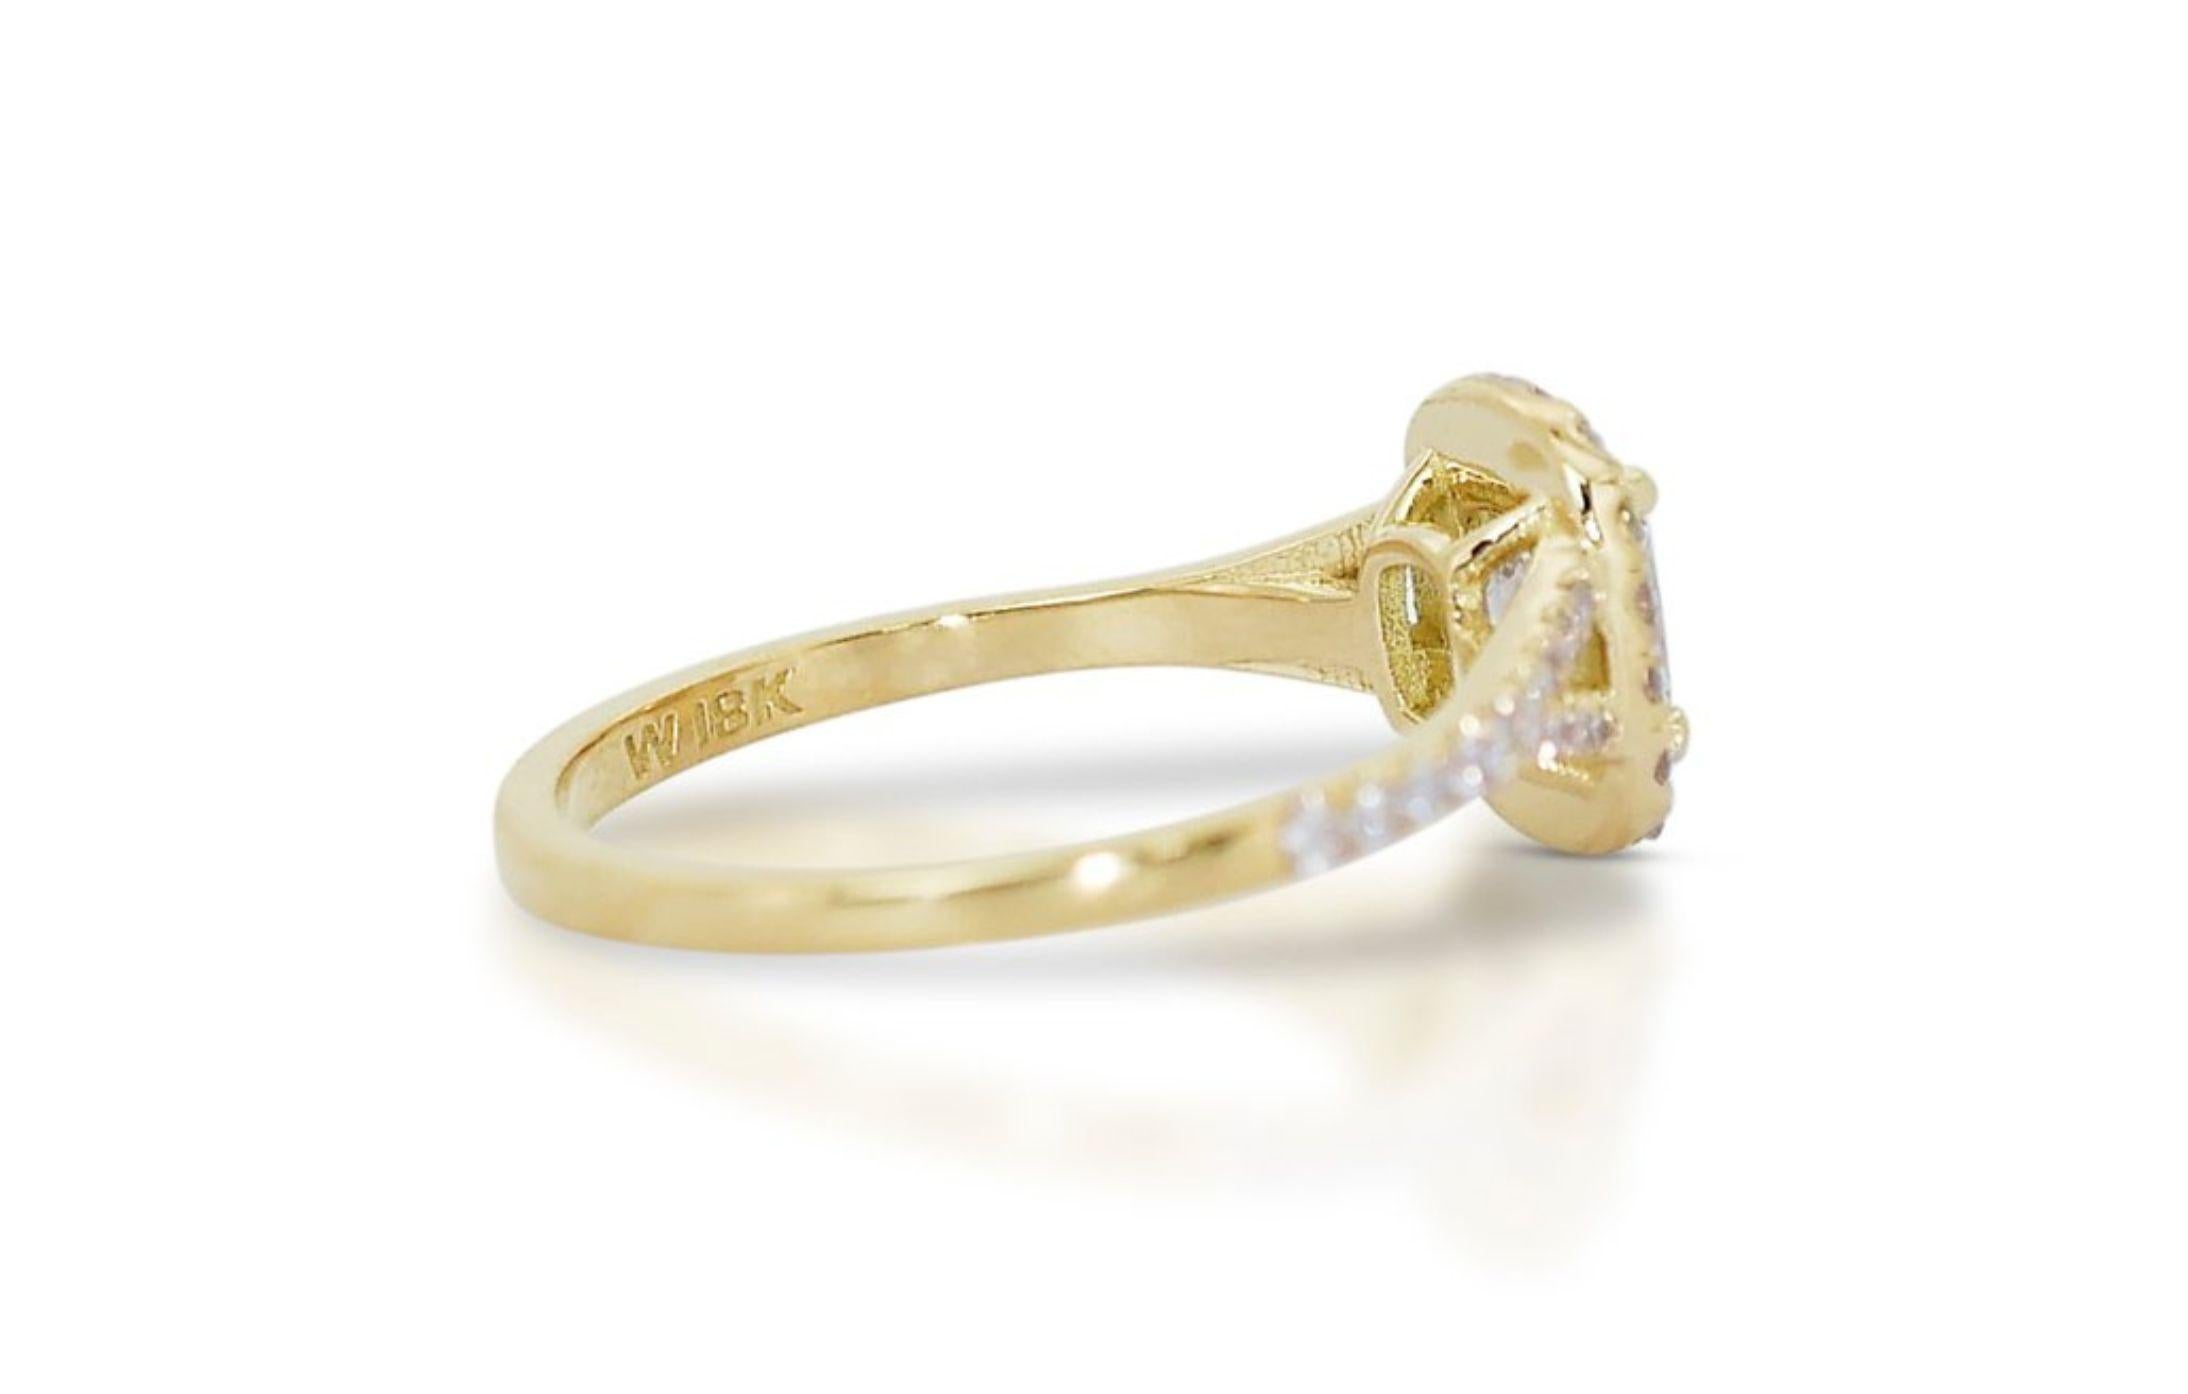 Women's Stunning 0.75ct Cushion-cut Diamond Pave Ring in 18K Yellow Gold